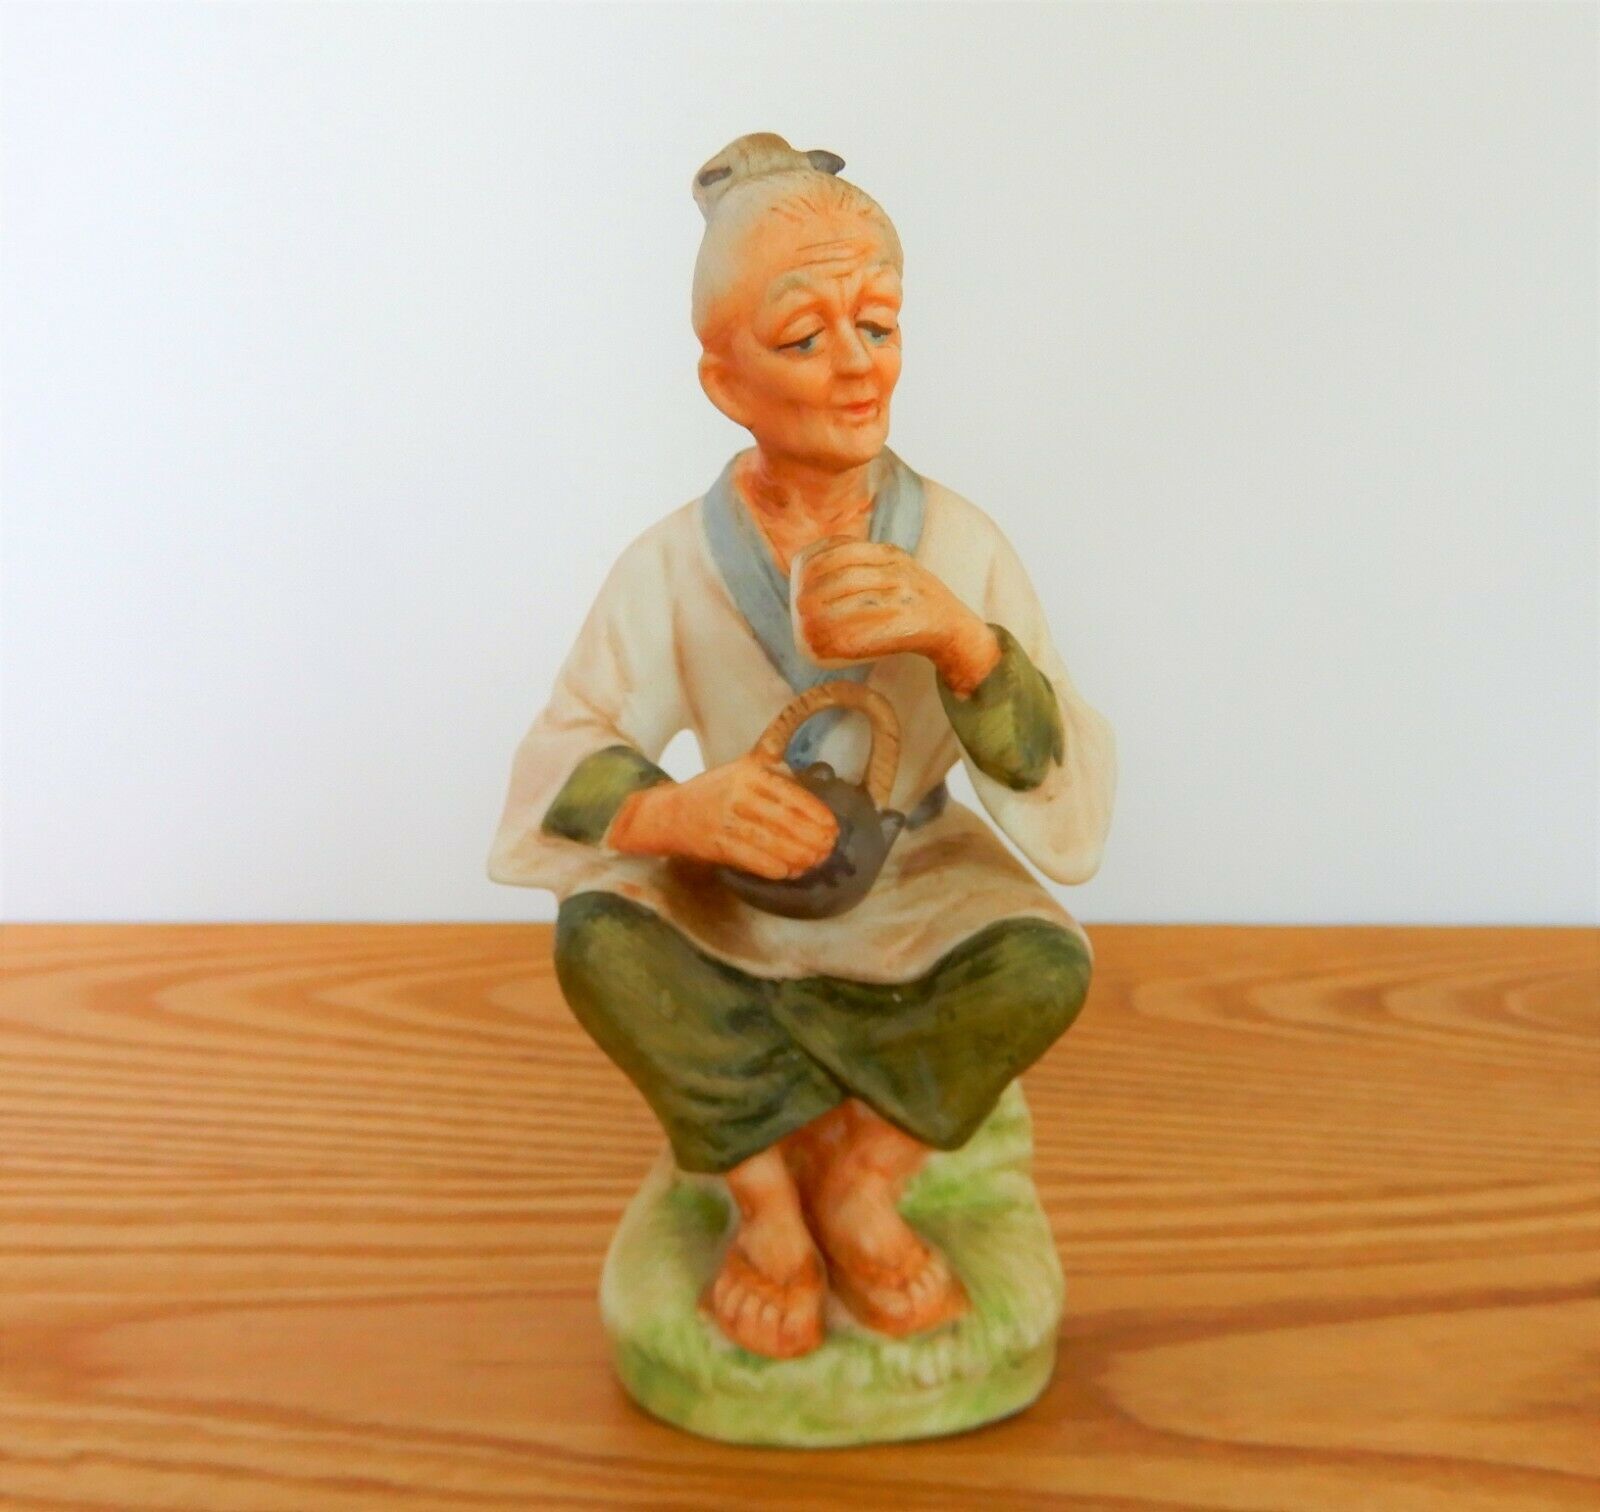 Ceramic Japanese man figurine NAPCO Japan 1963 - $15.00